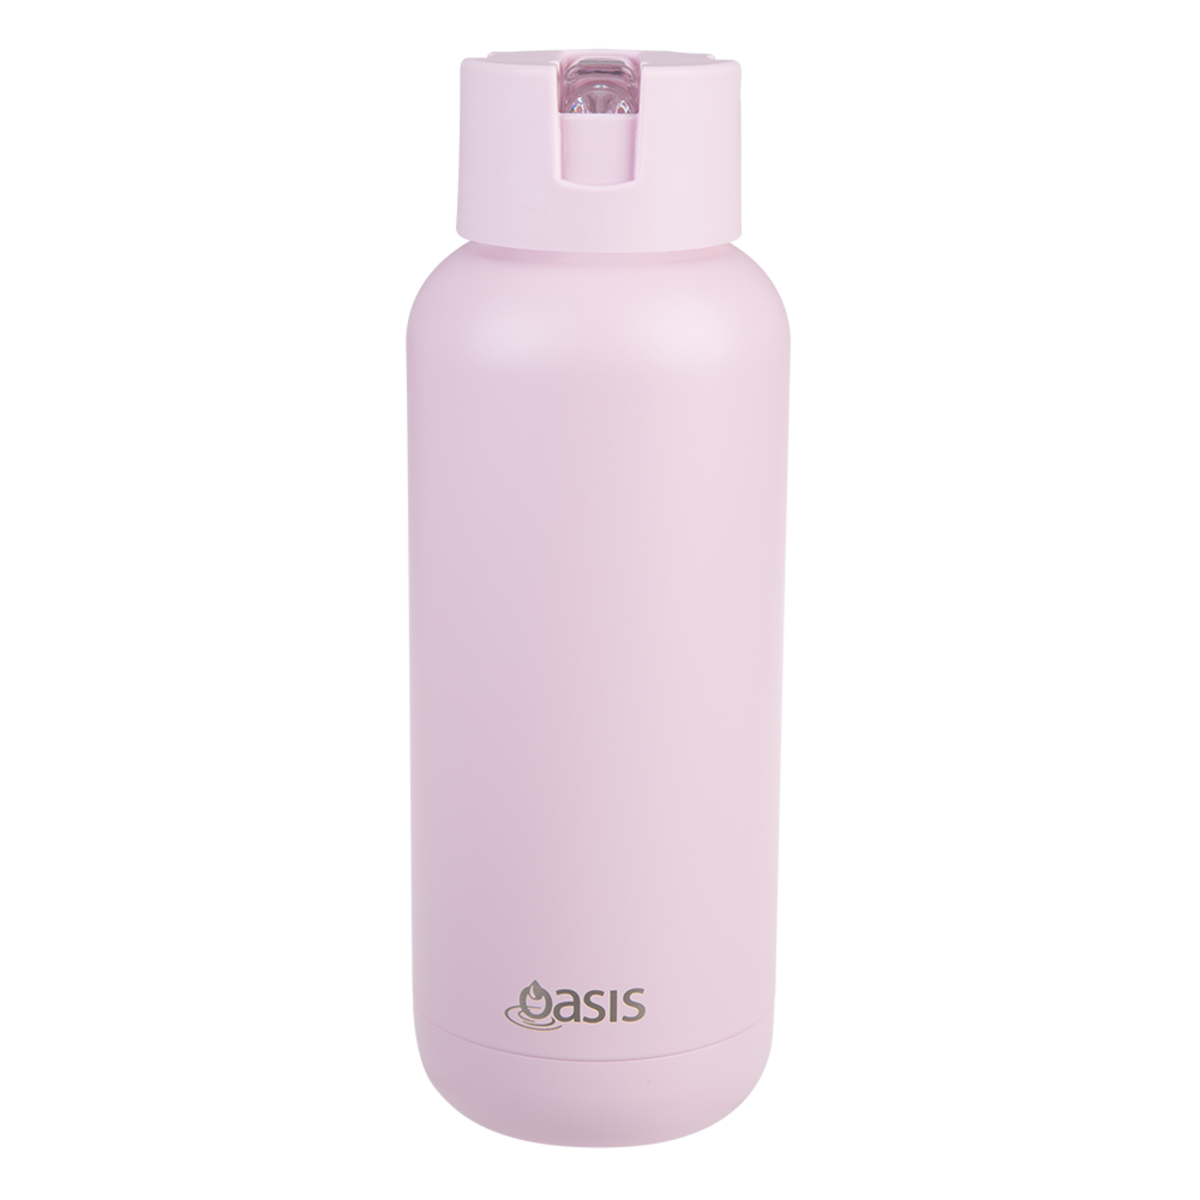 Oasis Moda Insulated Steel Ceramic Drink Bottle 1 litre